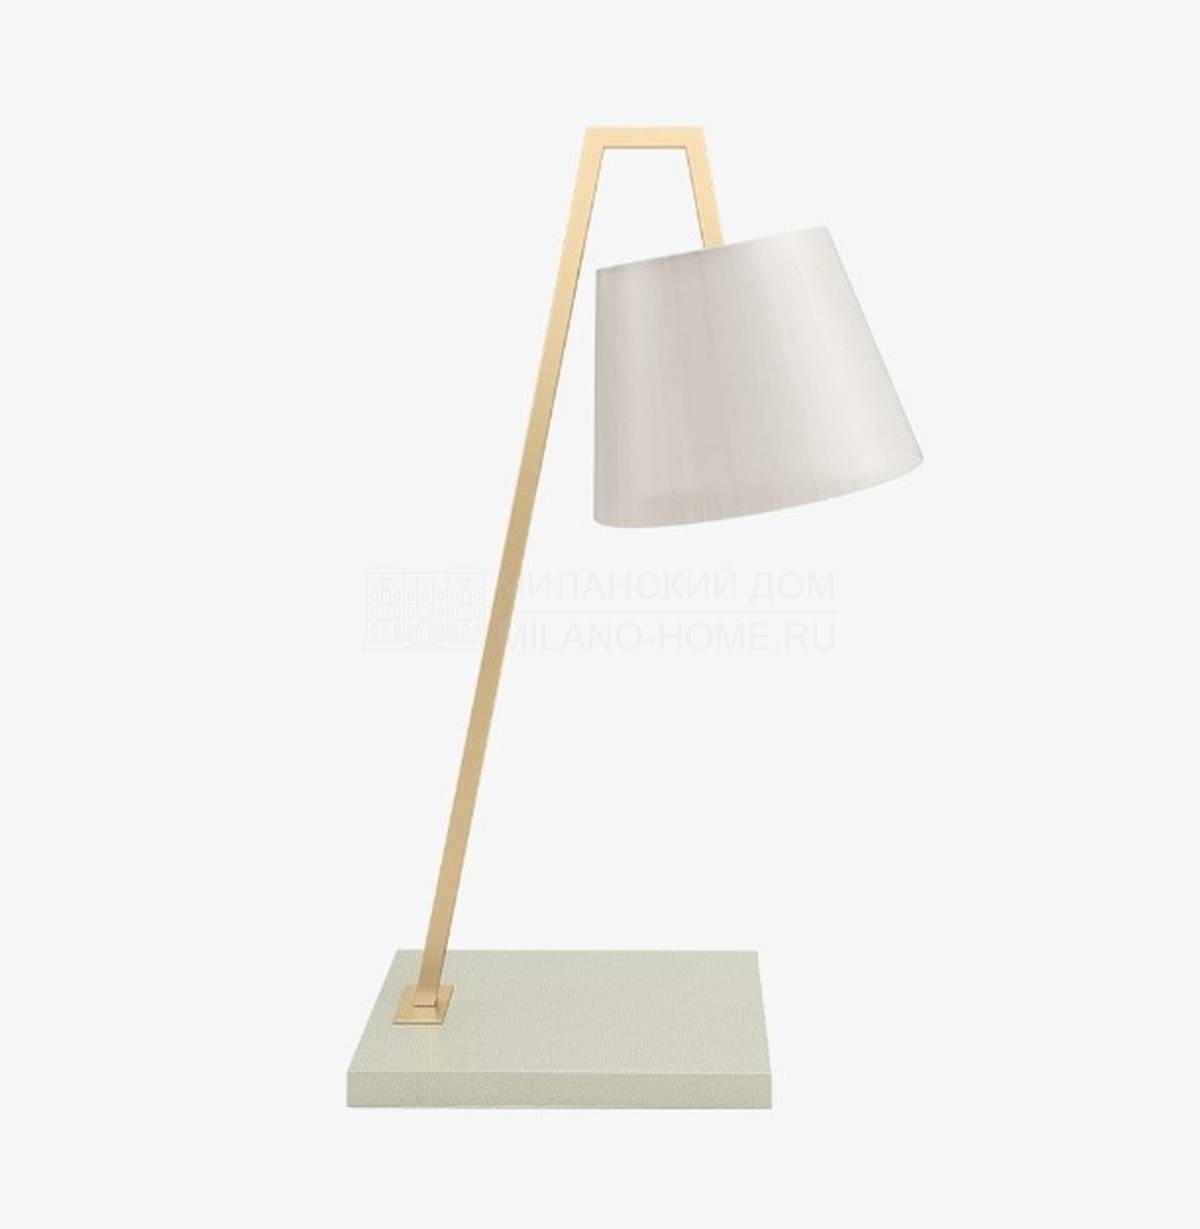 Настольная лампа Almancil table lamp из Португалии фабрики FRATO